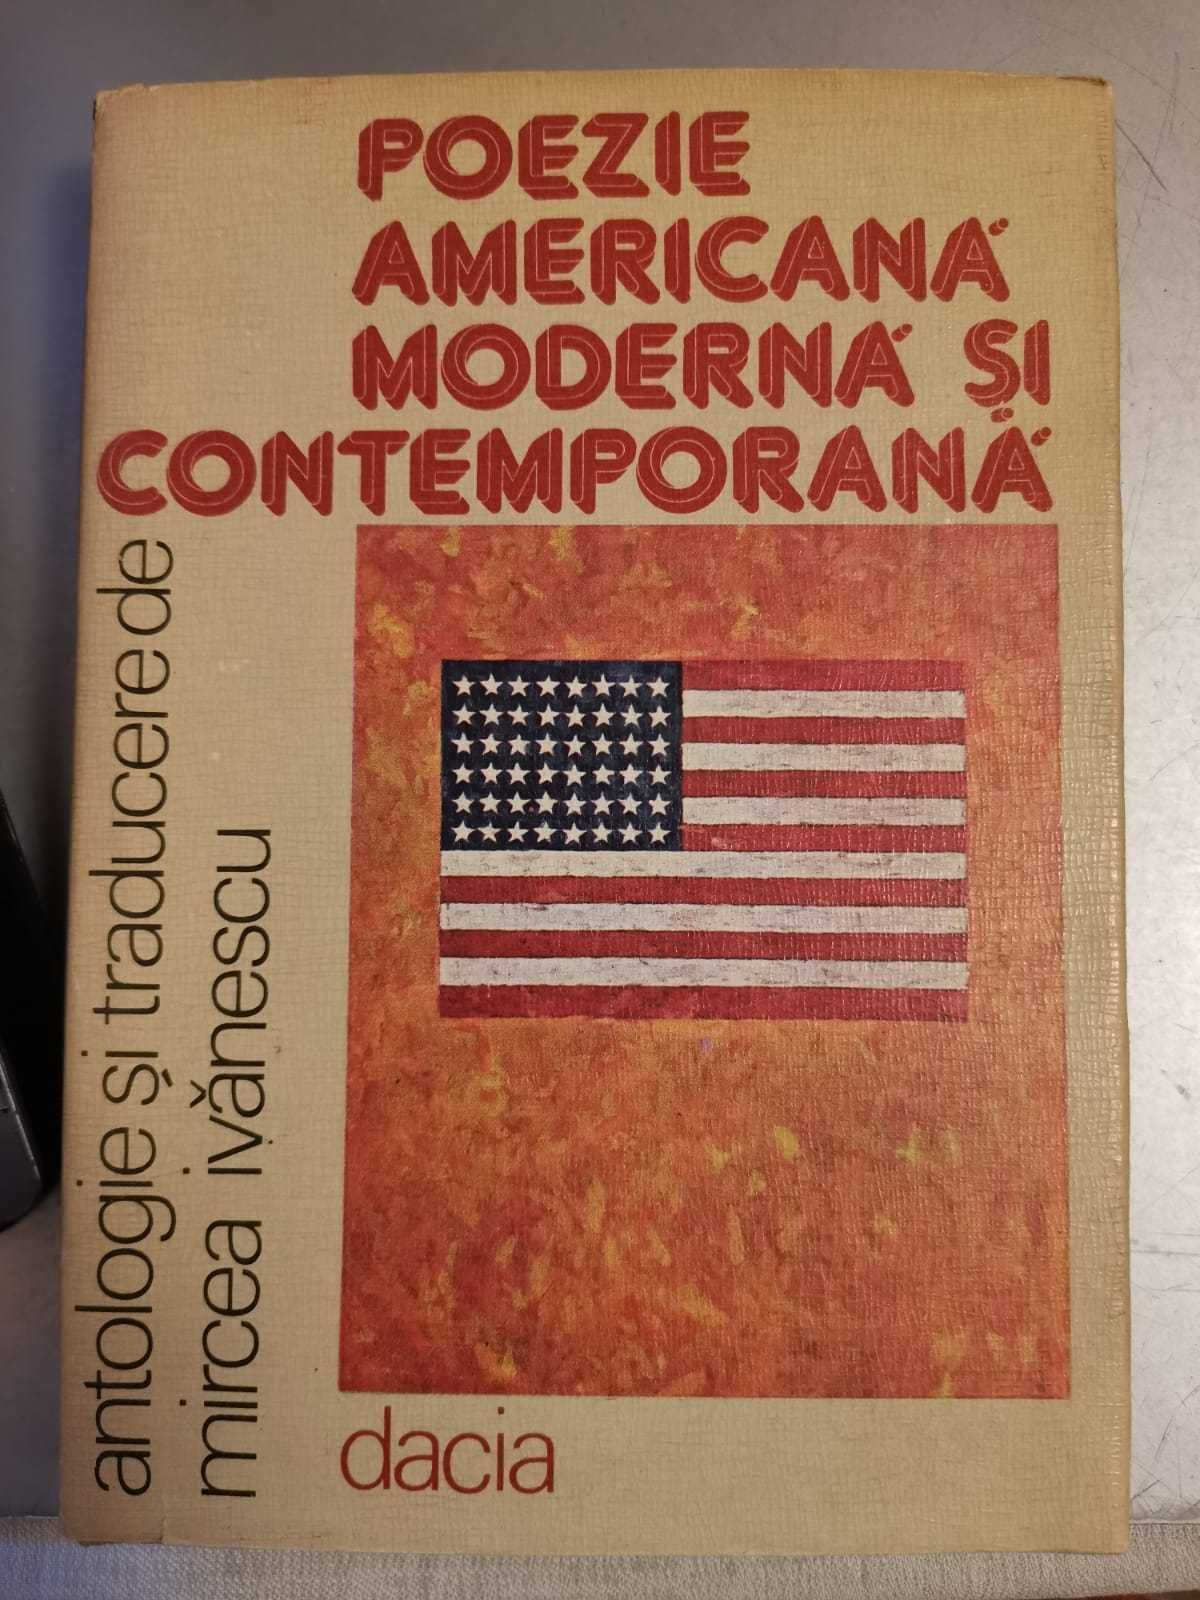 Poezie americana moderna si contemporana antol.&trad. Mircea Ivanescu